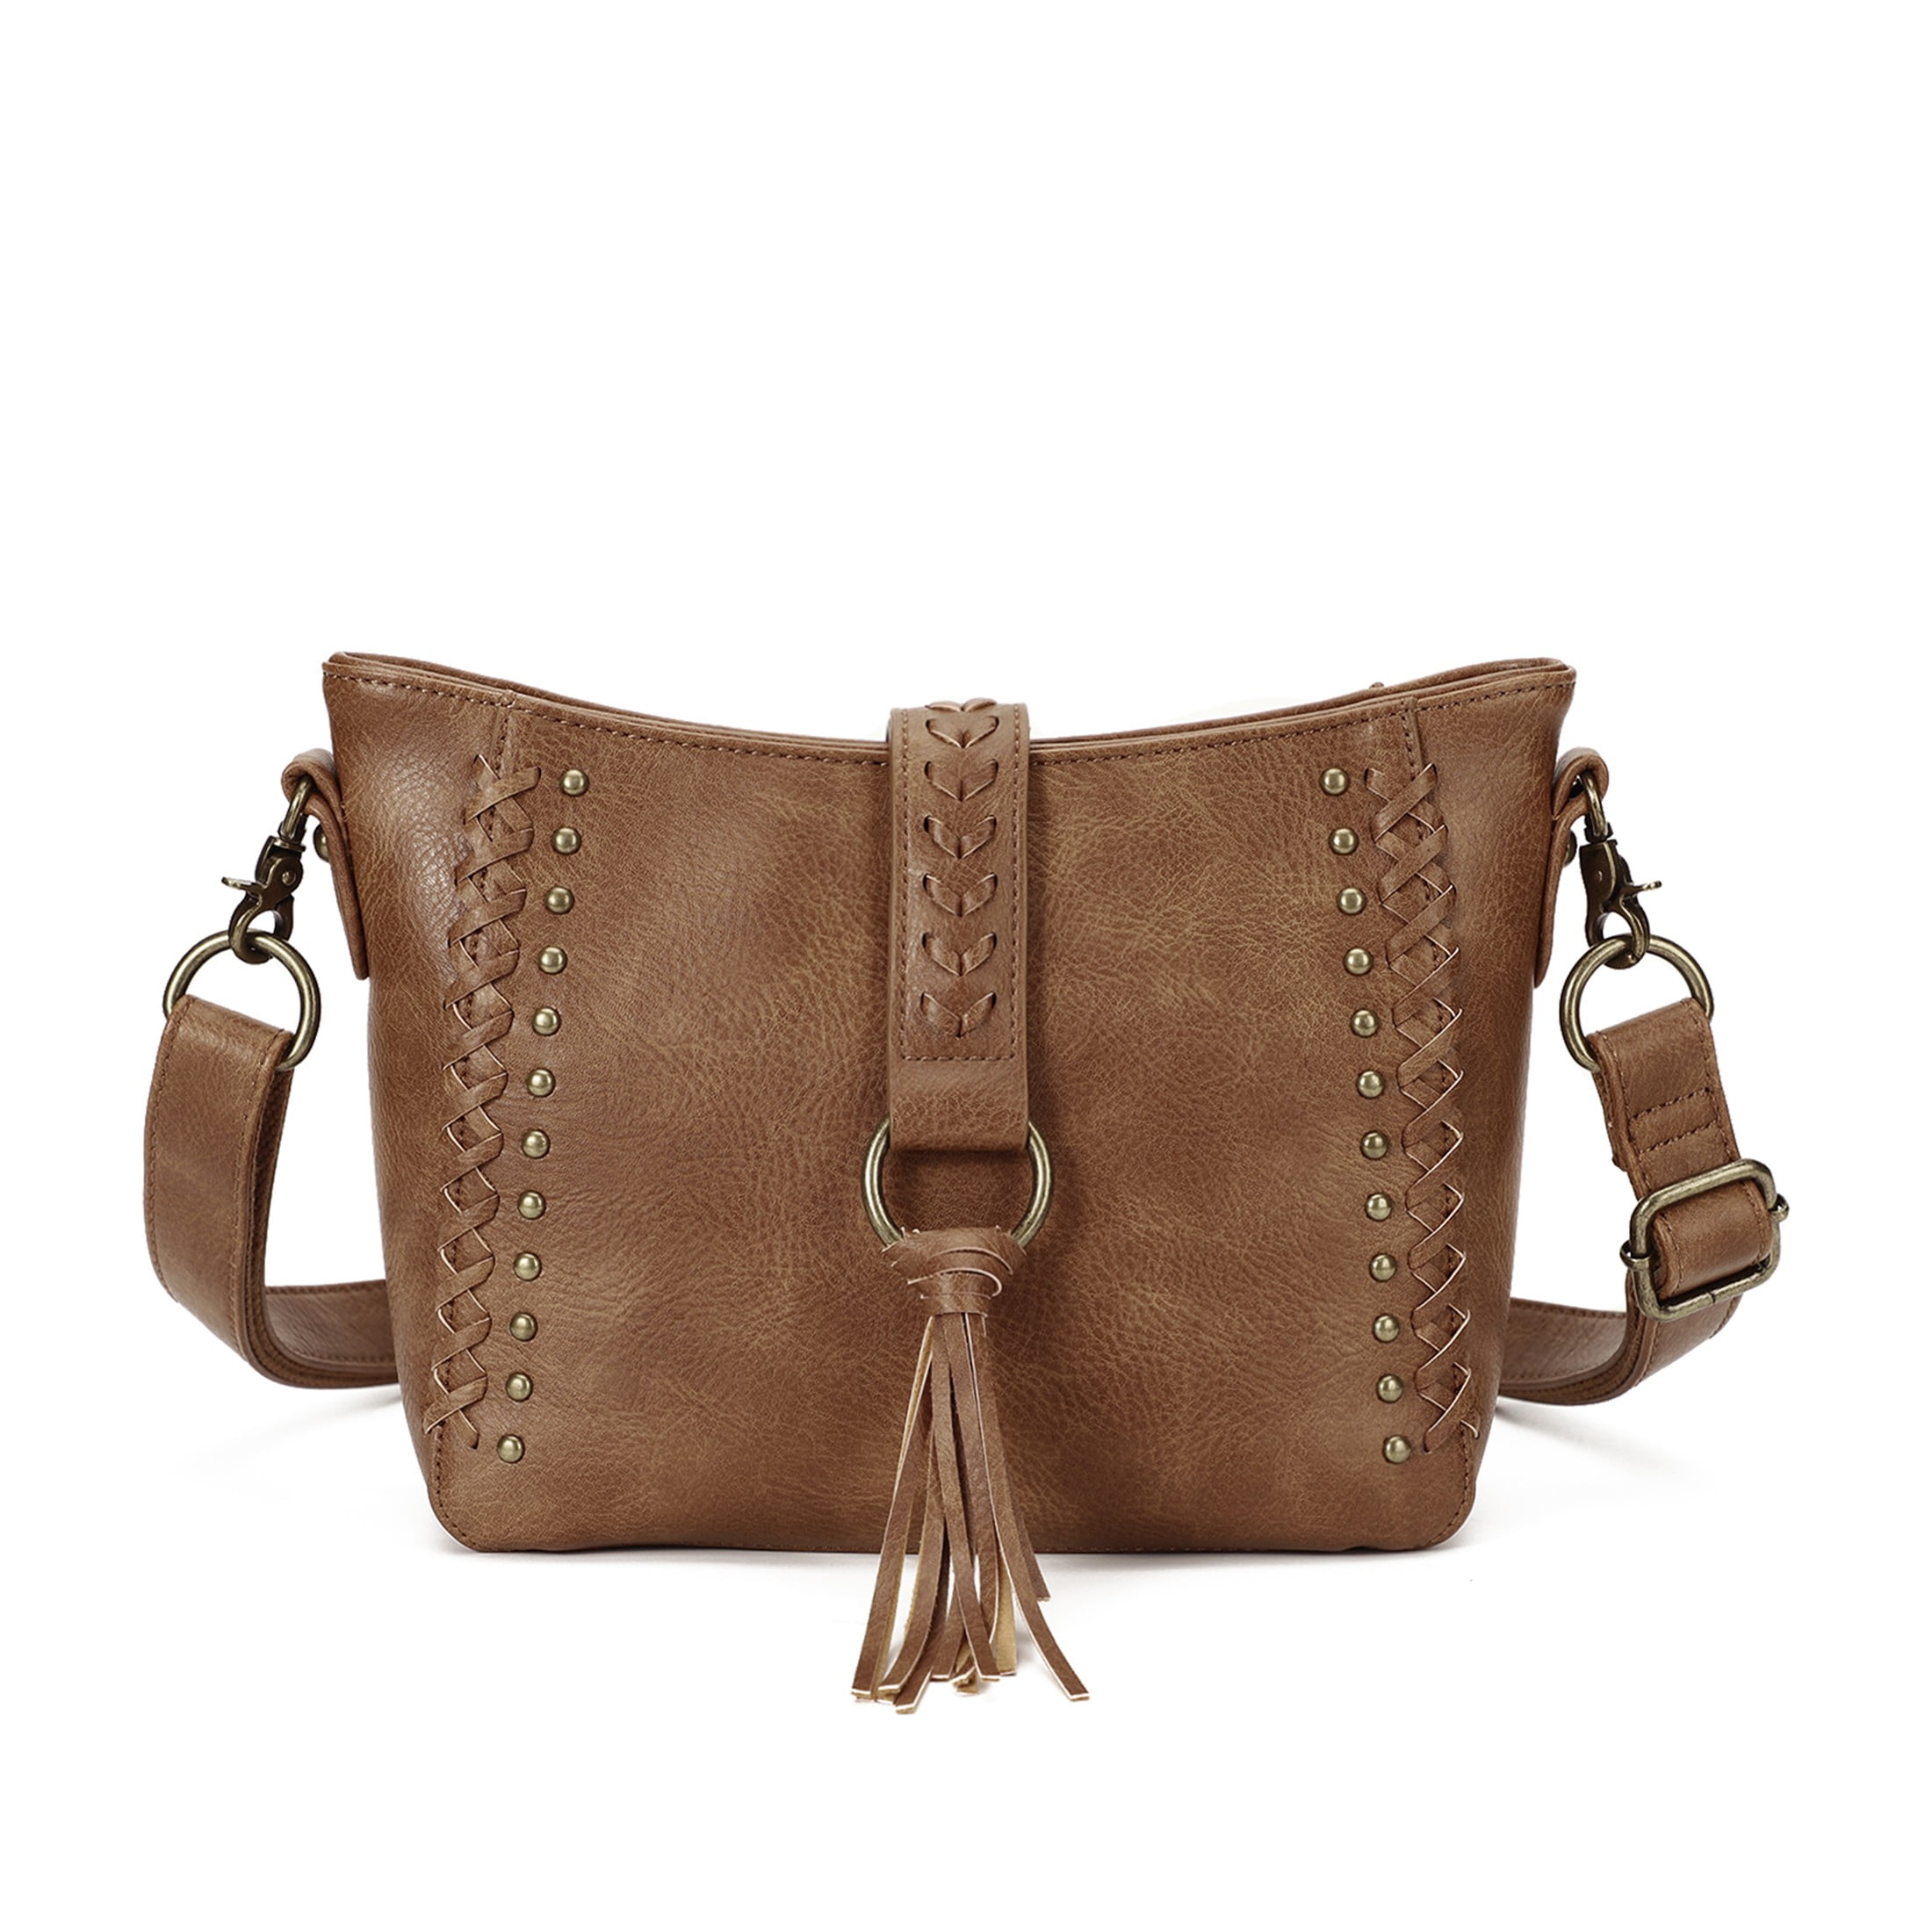 KL928 Small Purses for Women Shoulder Handbags Crossbody Bag with ...